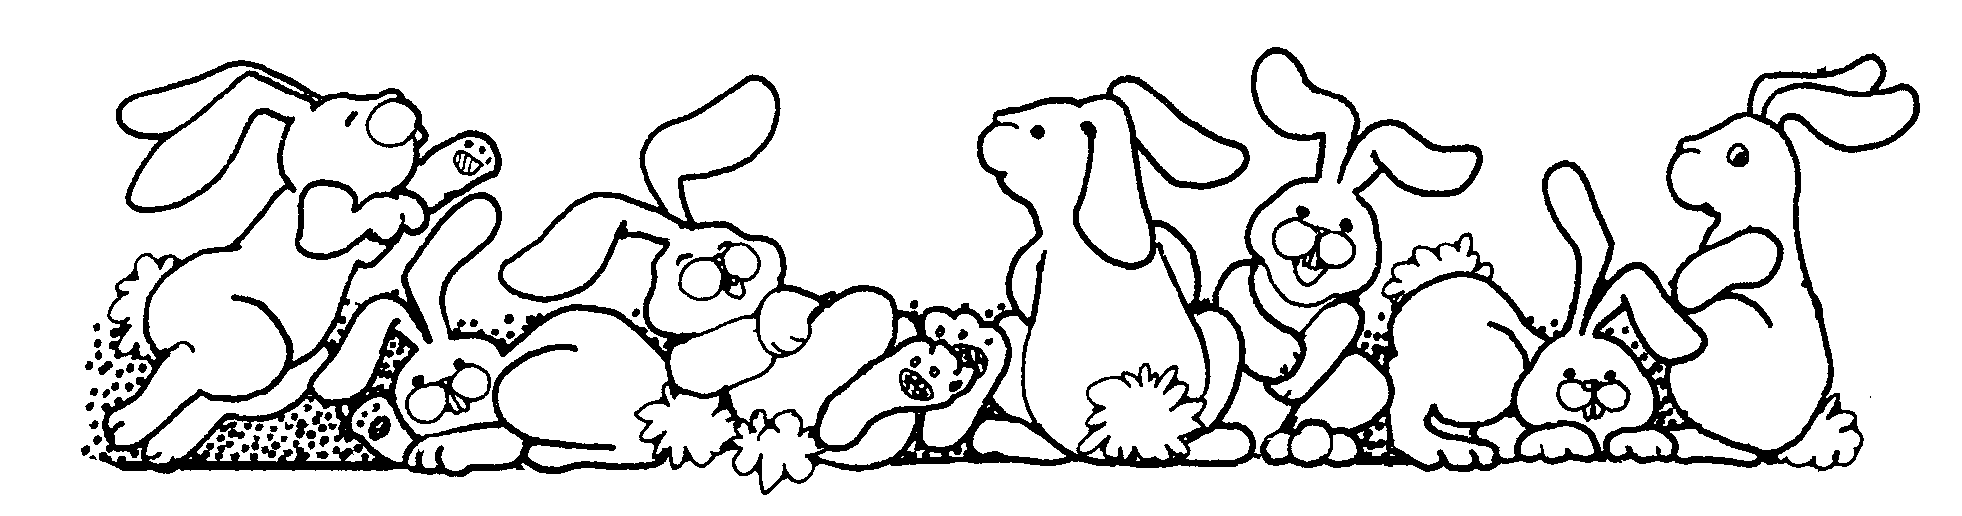 bunny clipart group